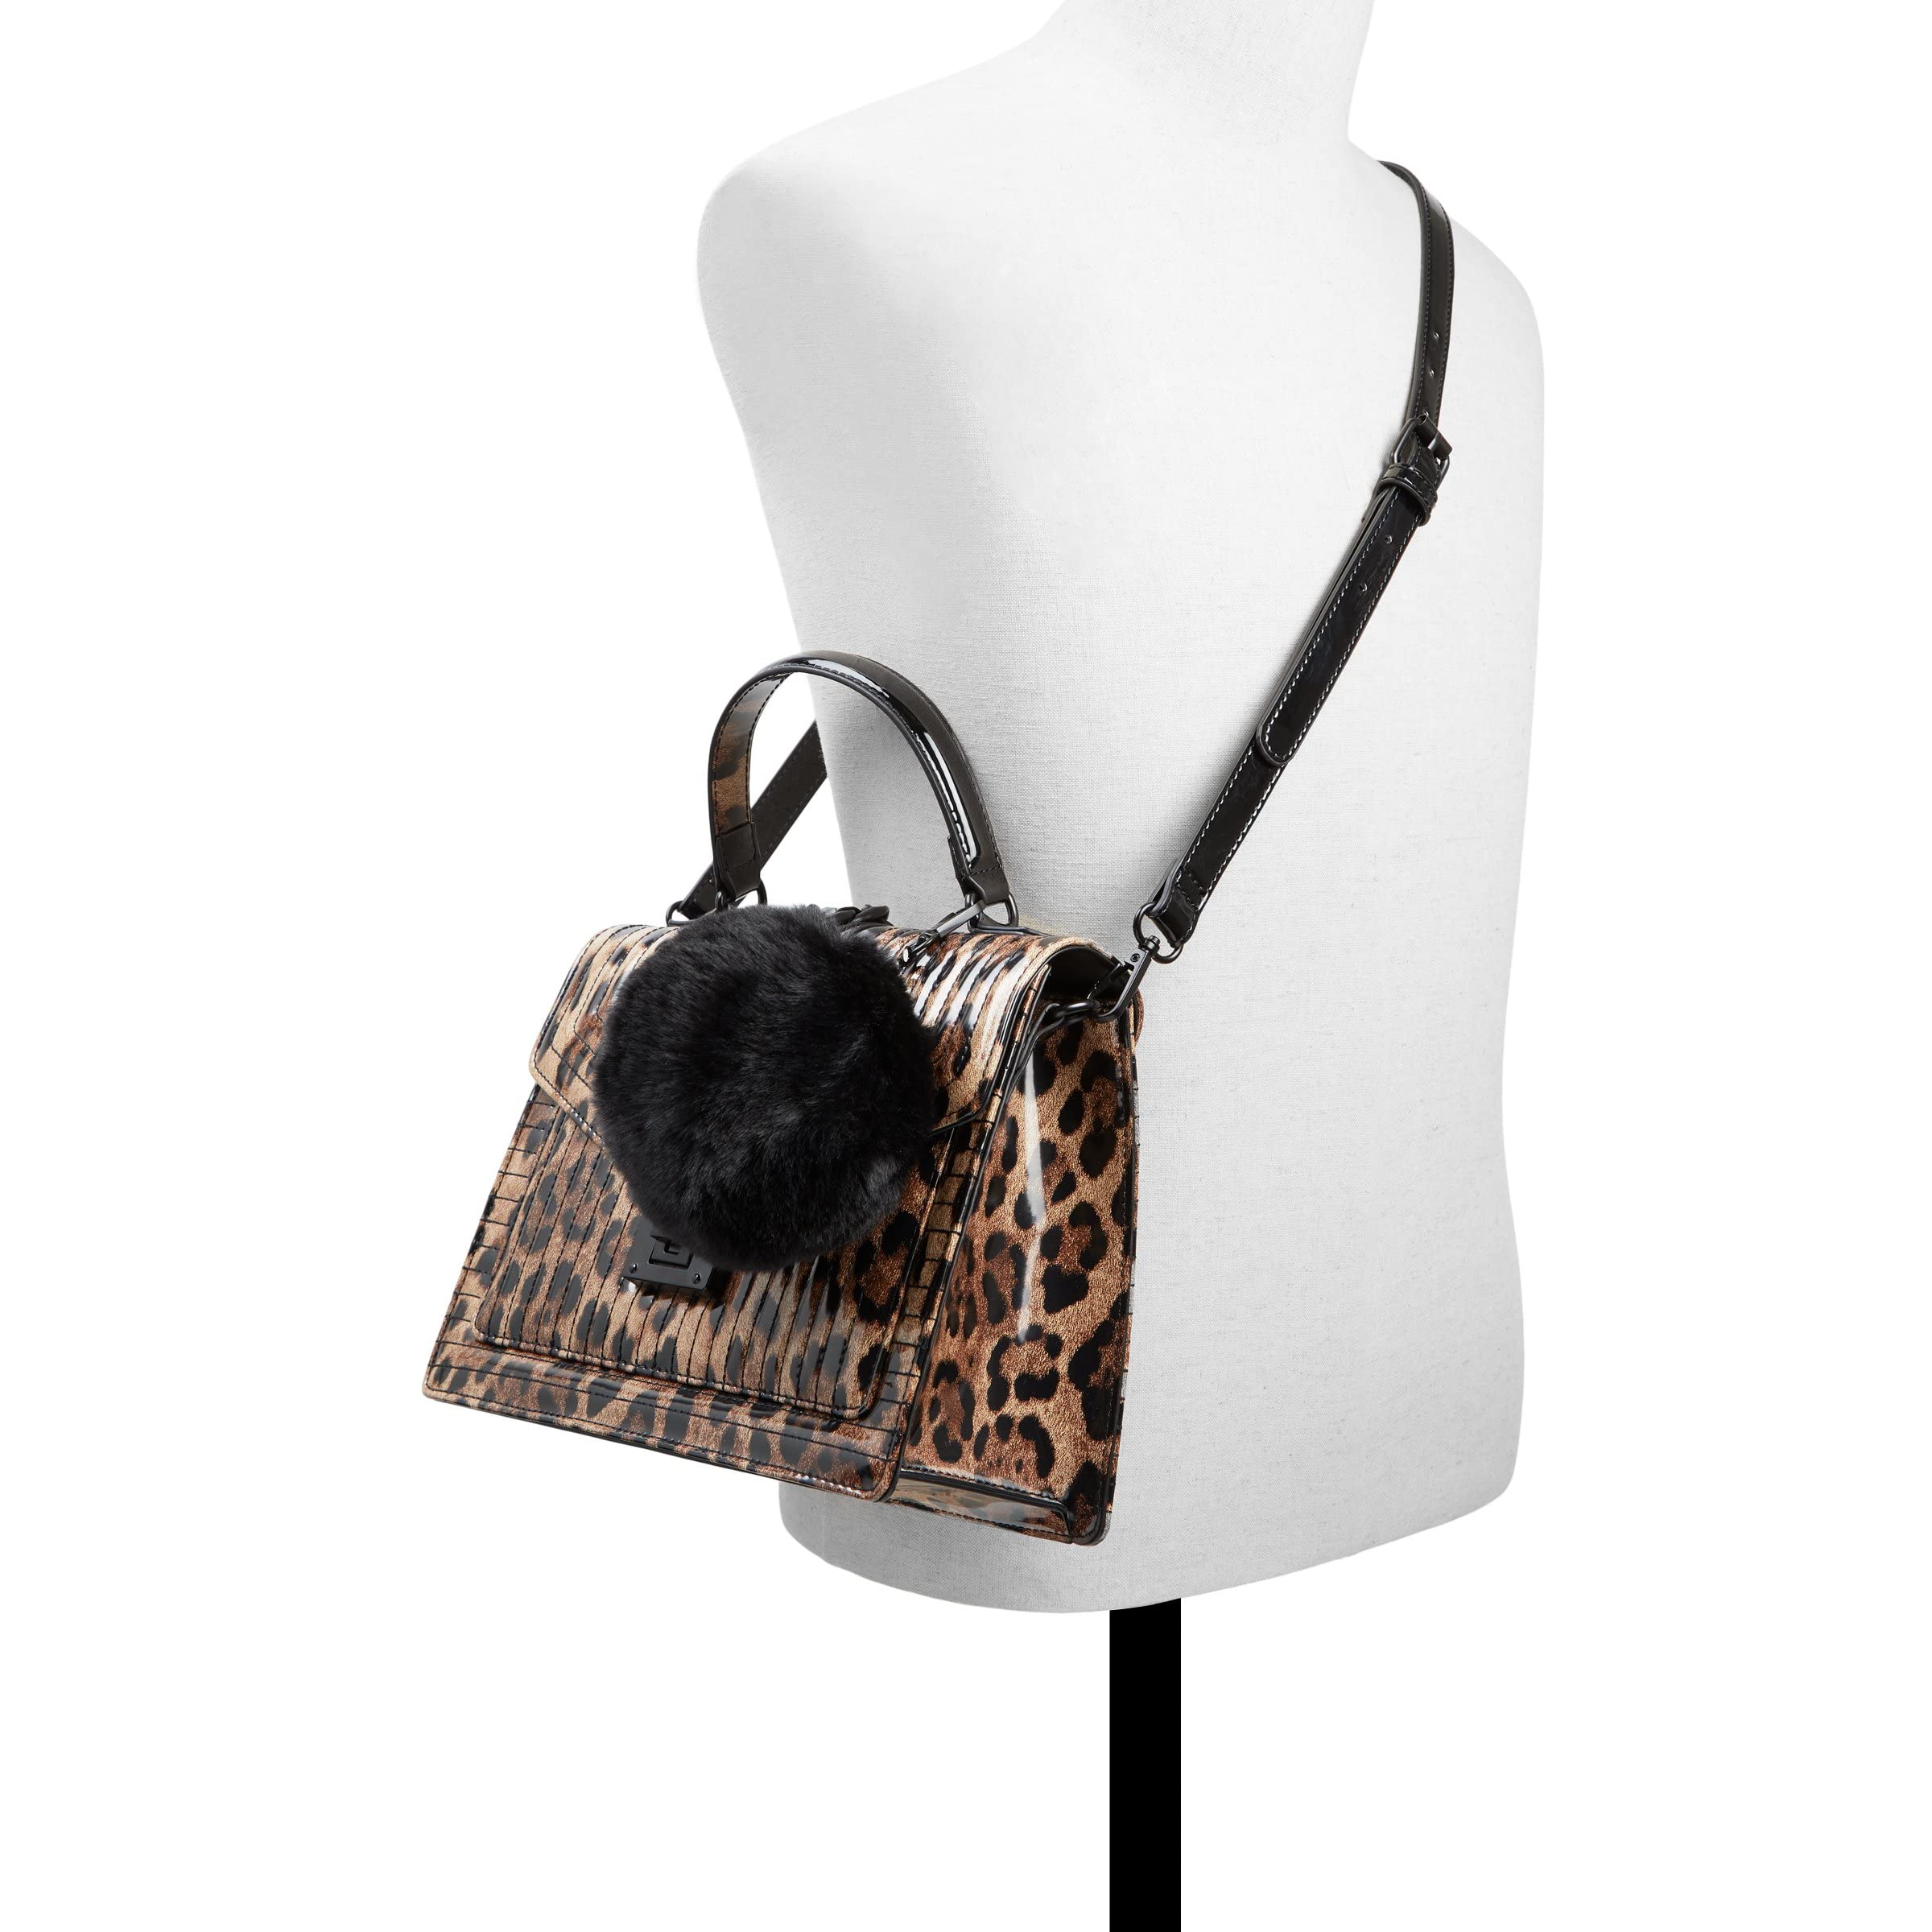 ALDO Women's Jerilini Top Handle Bag